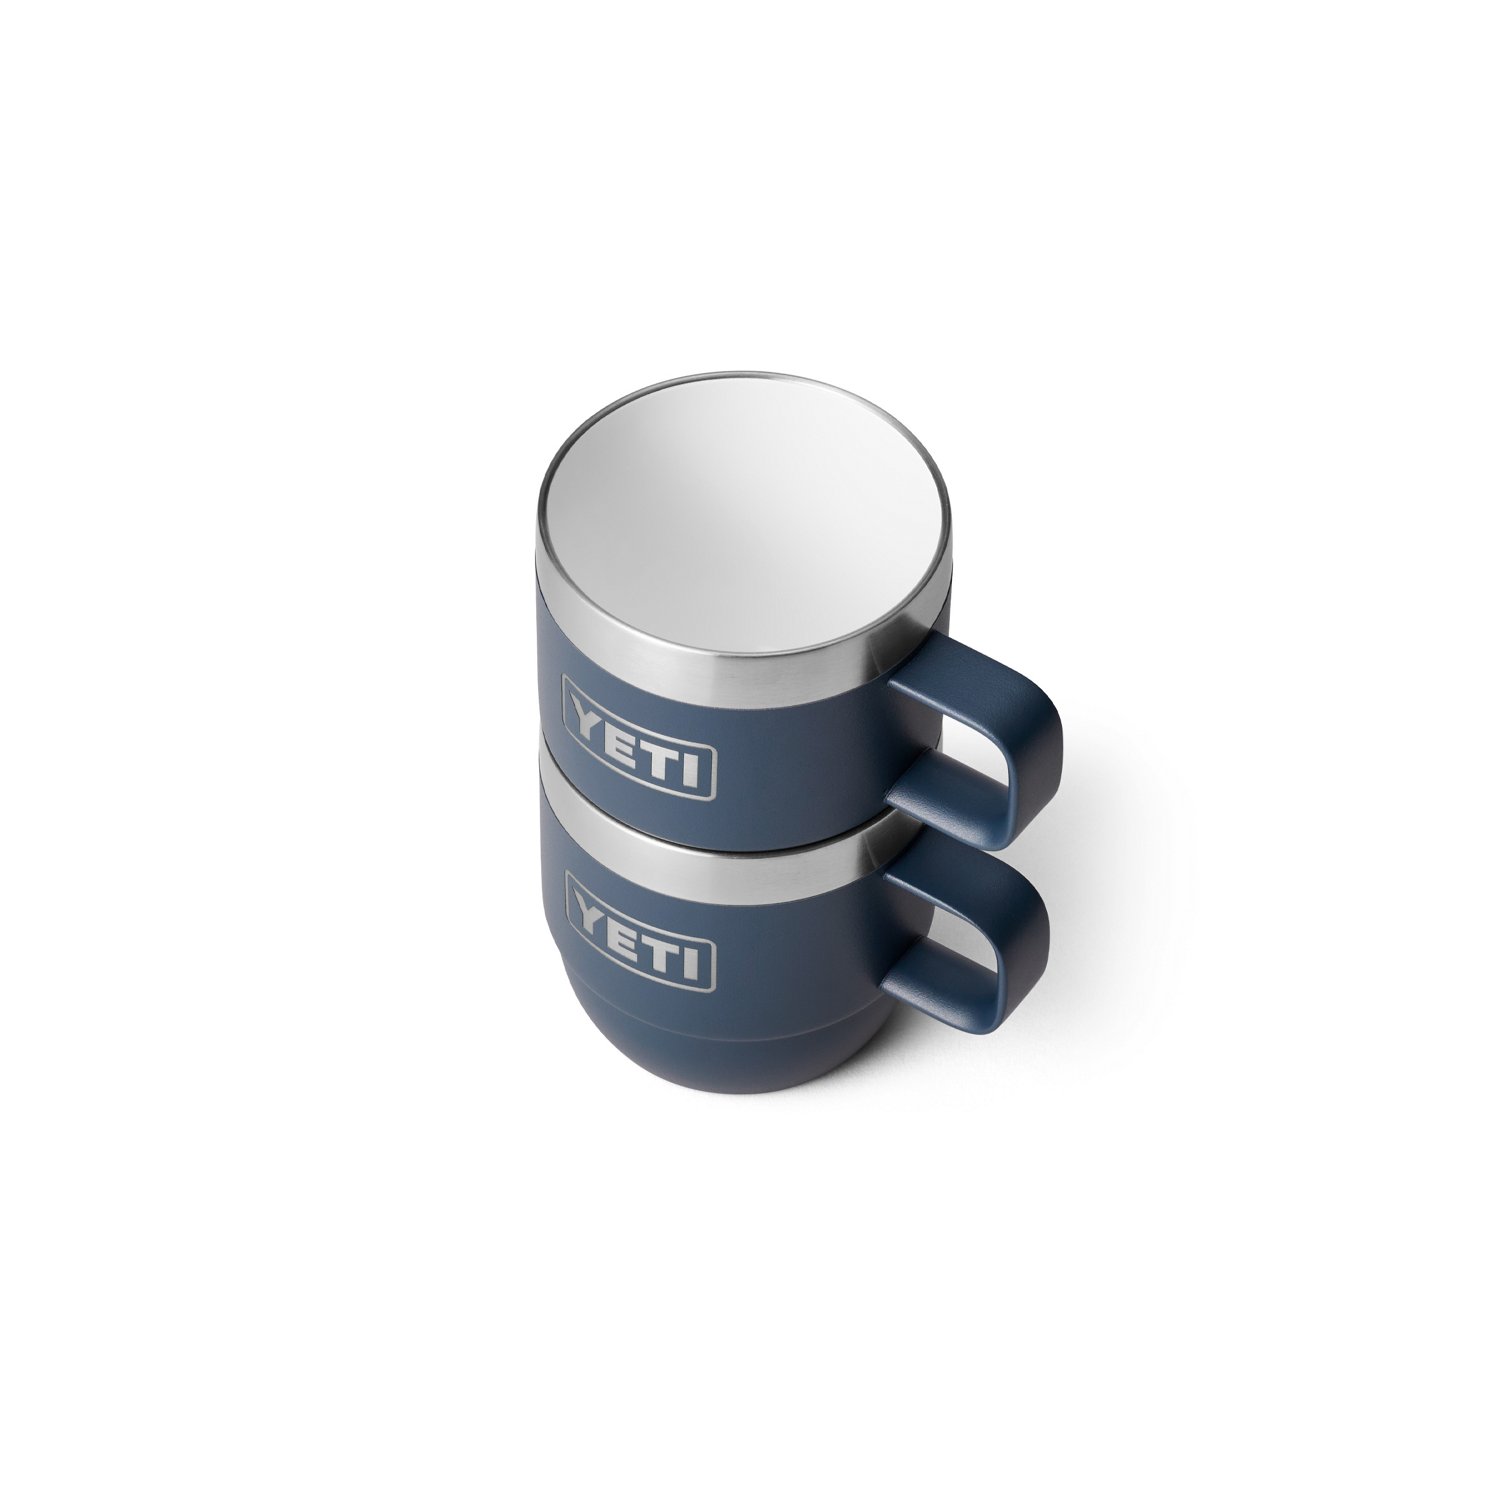 YETI Rambler 4 oz White Espresso Cup, 2-Pack